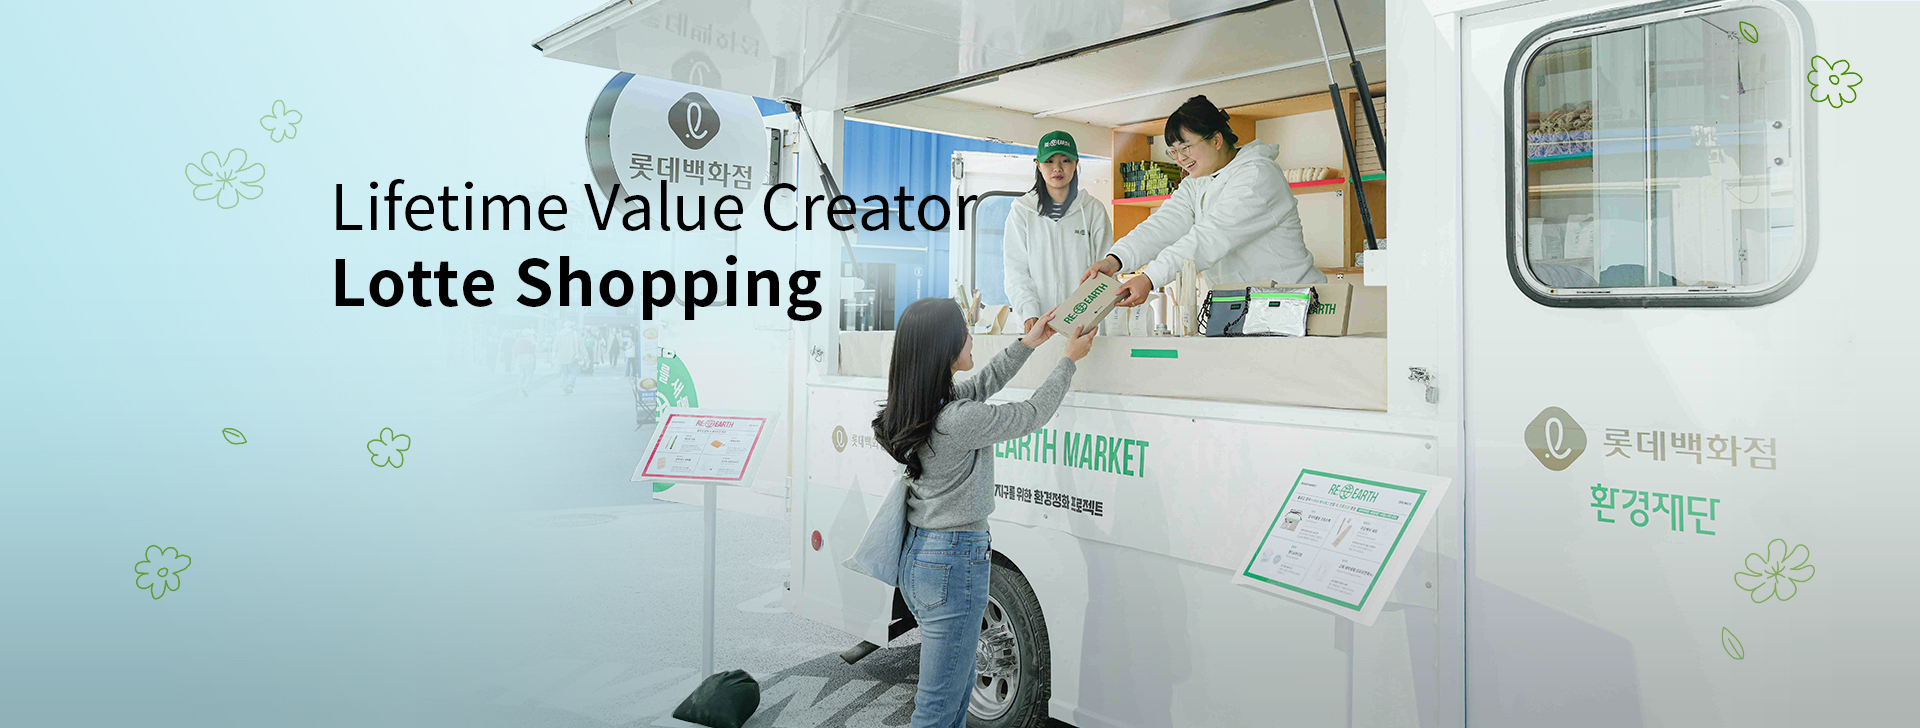 Lifetime Value Creator Lotte Shopping